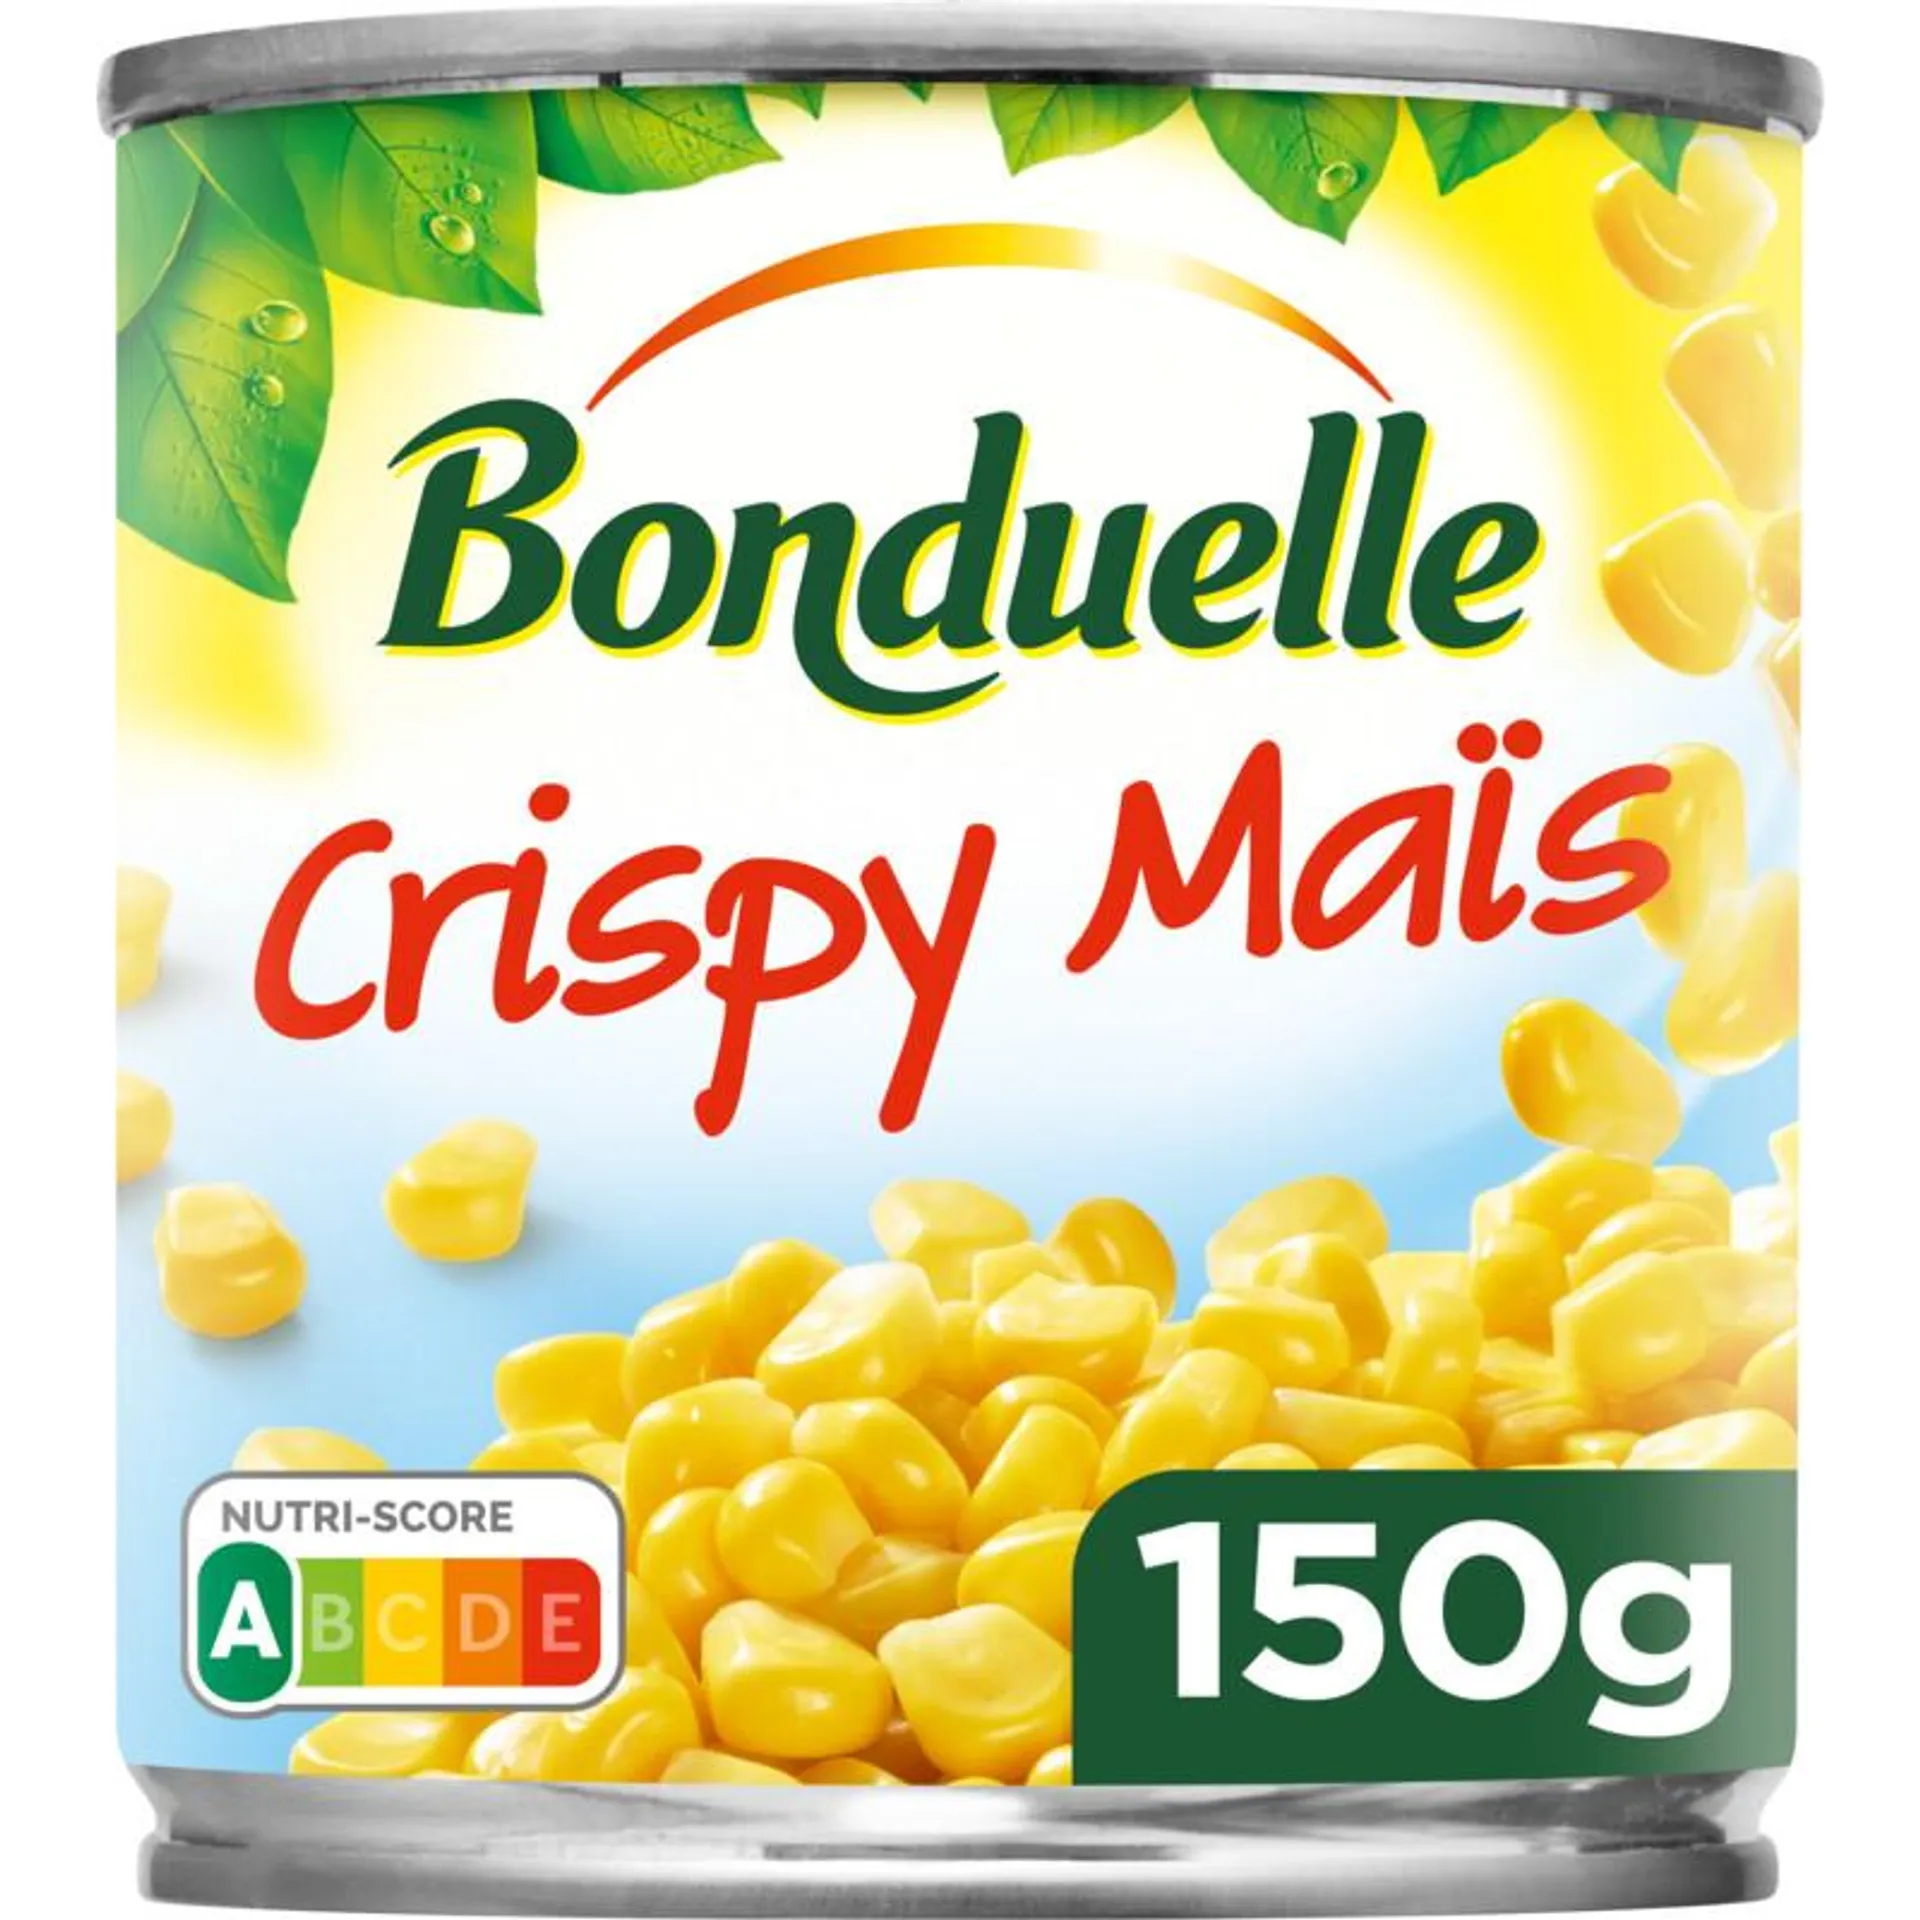 Bonduelle Crispy maïs